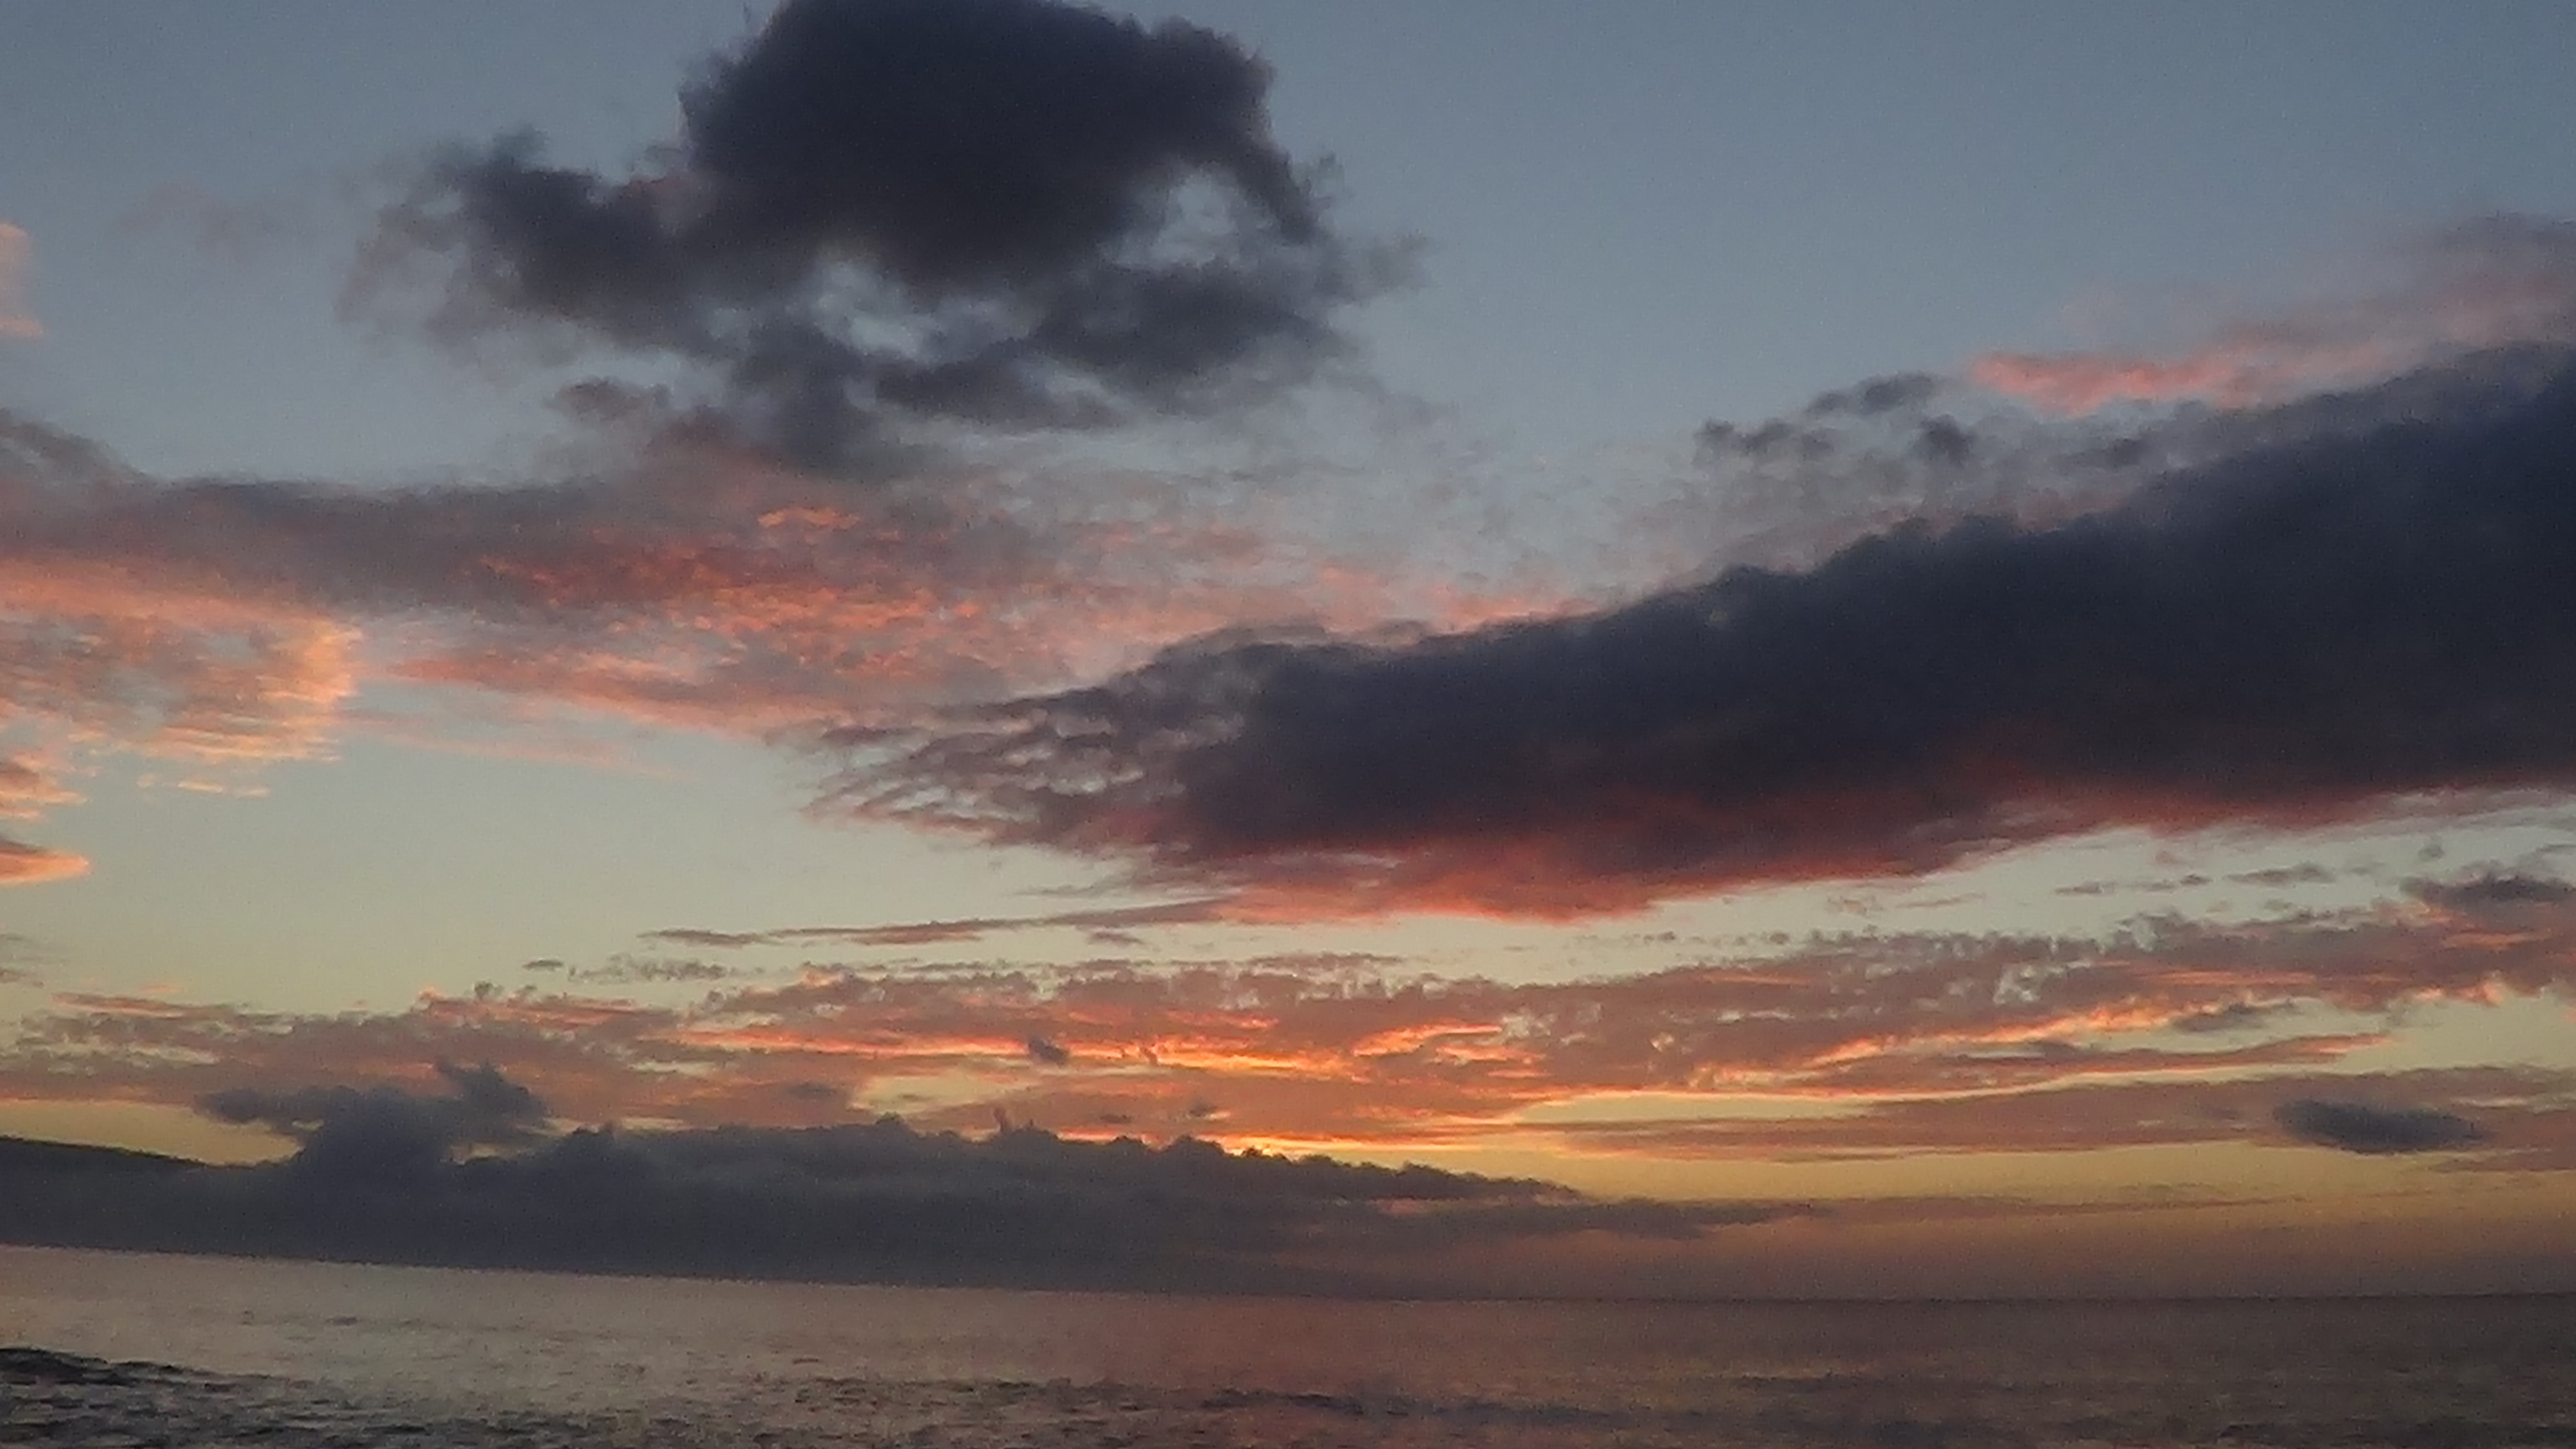 Maui Sunset, looking toward Lanai from Hale Maui